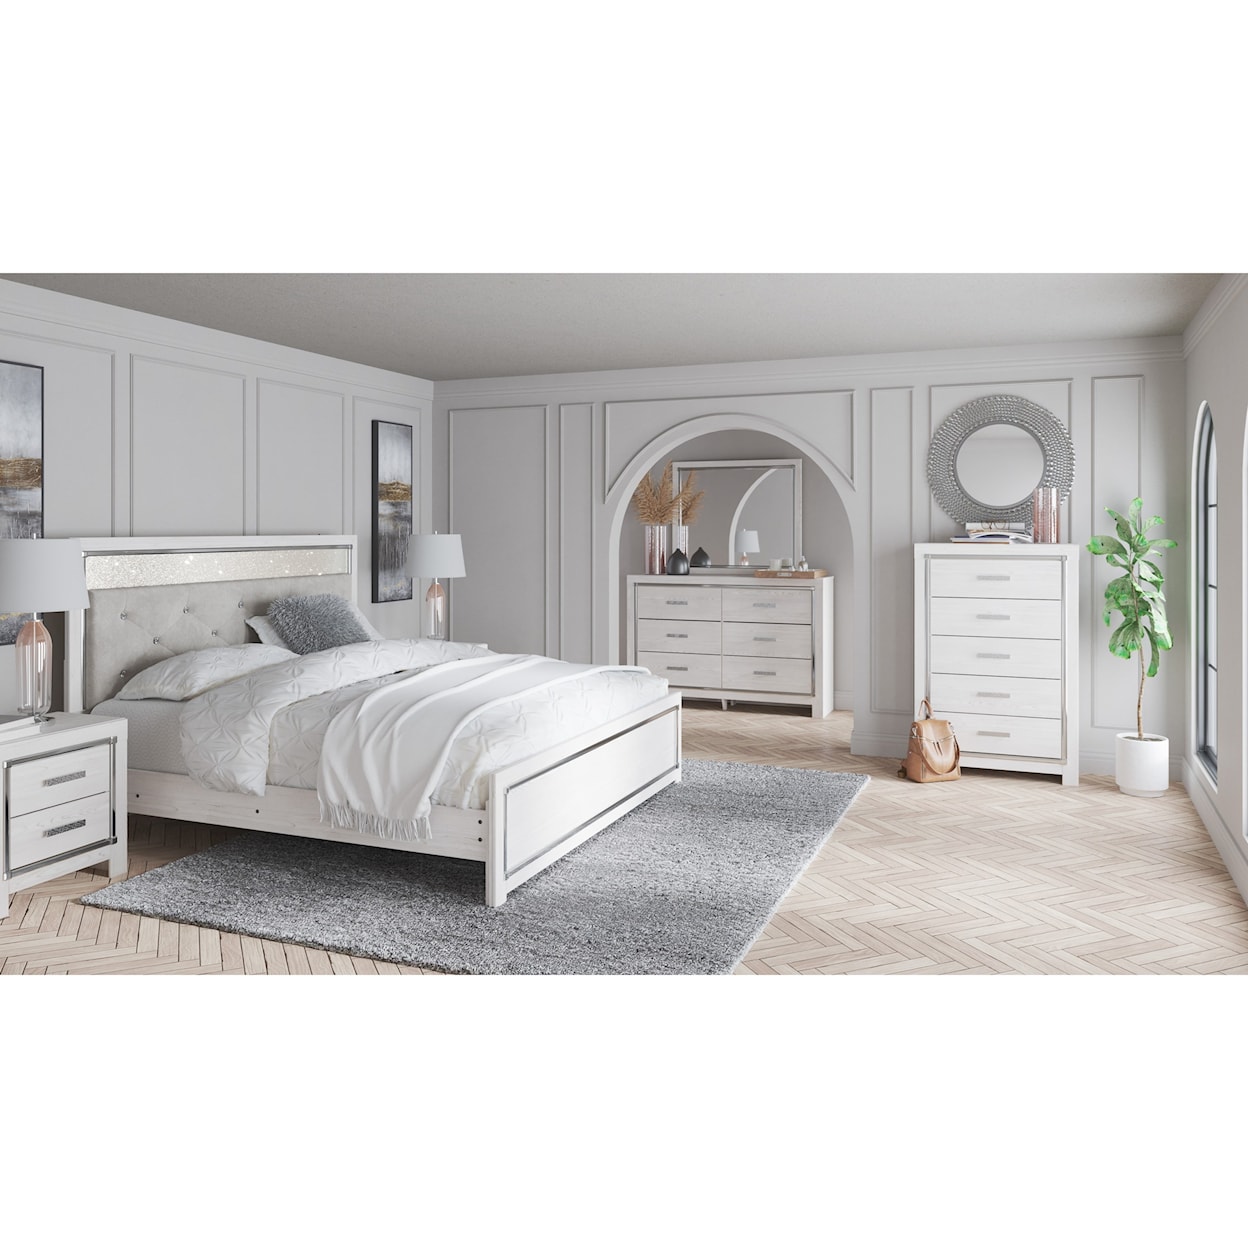 Ashley Furniture Signature Design Altyra King Bedroom Group